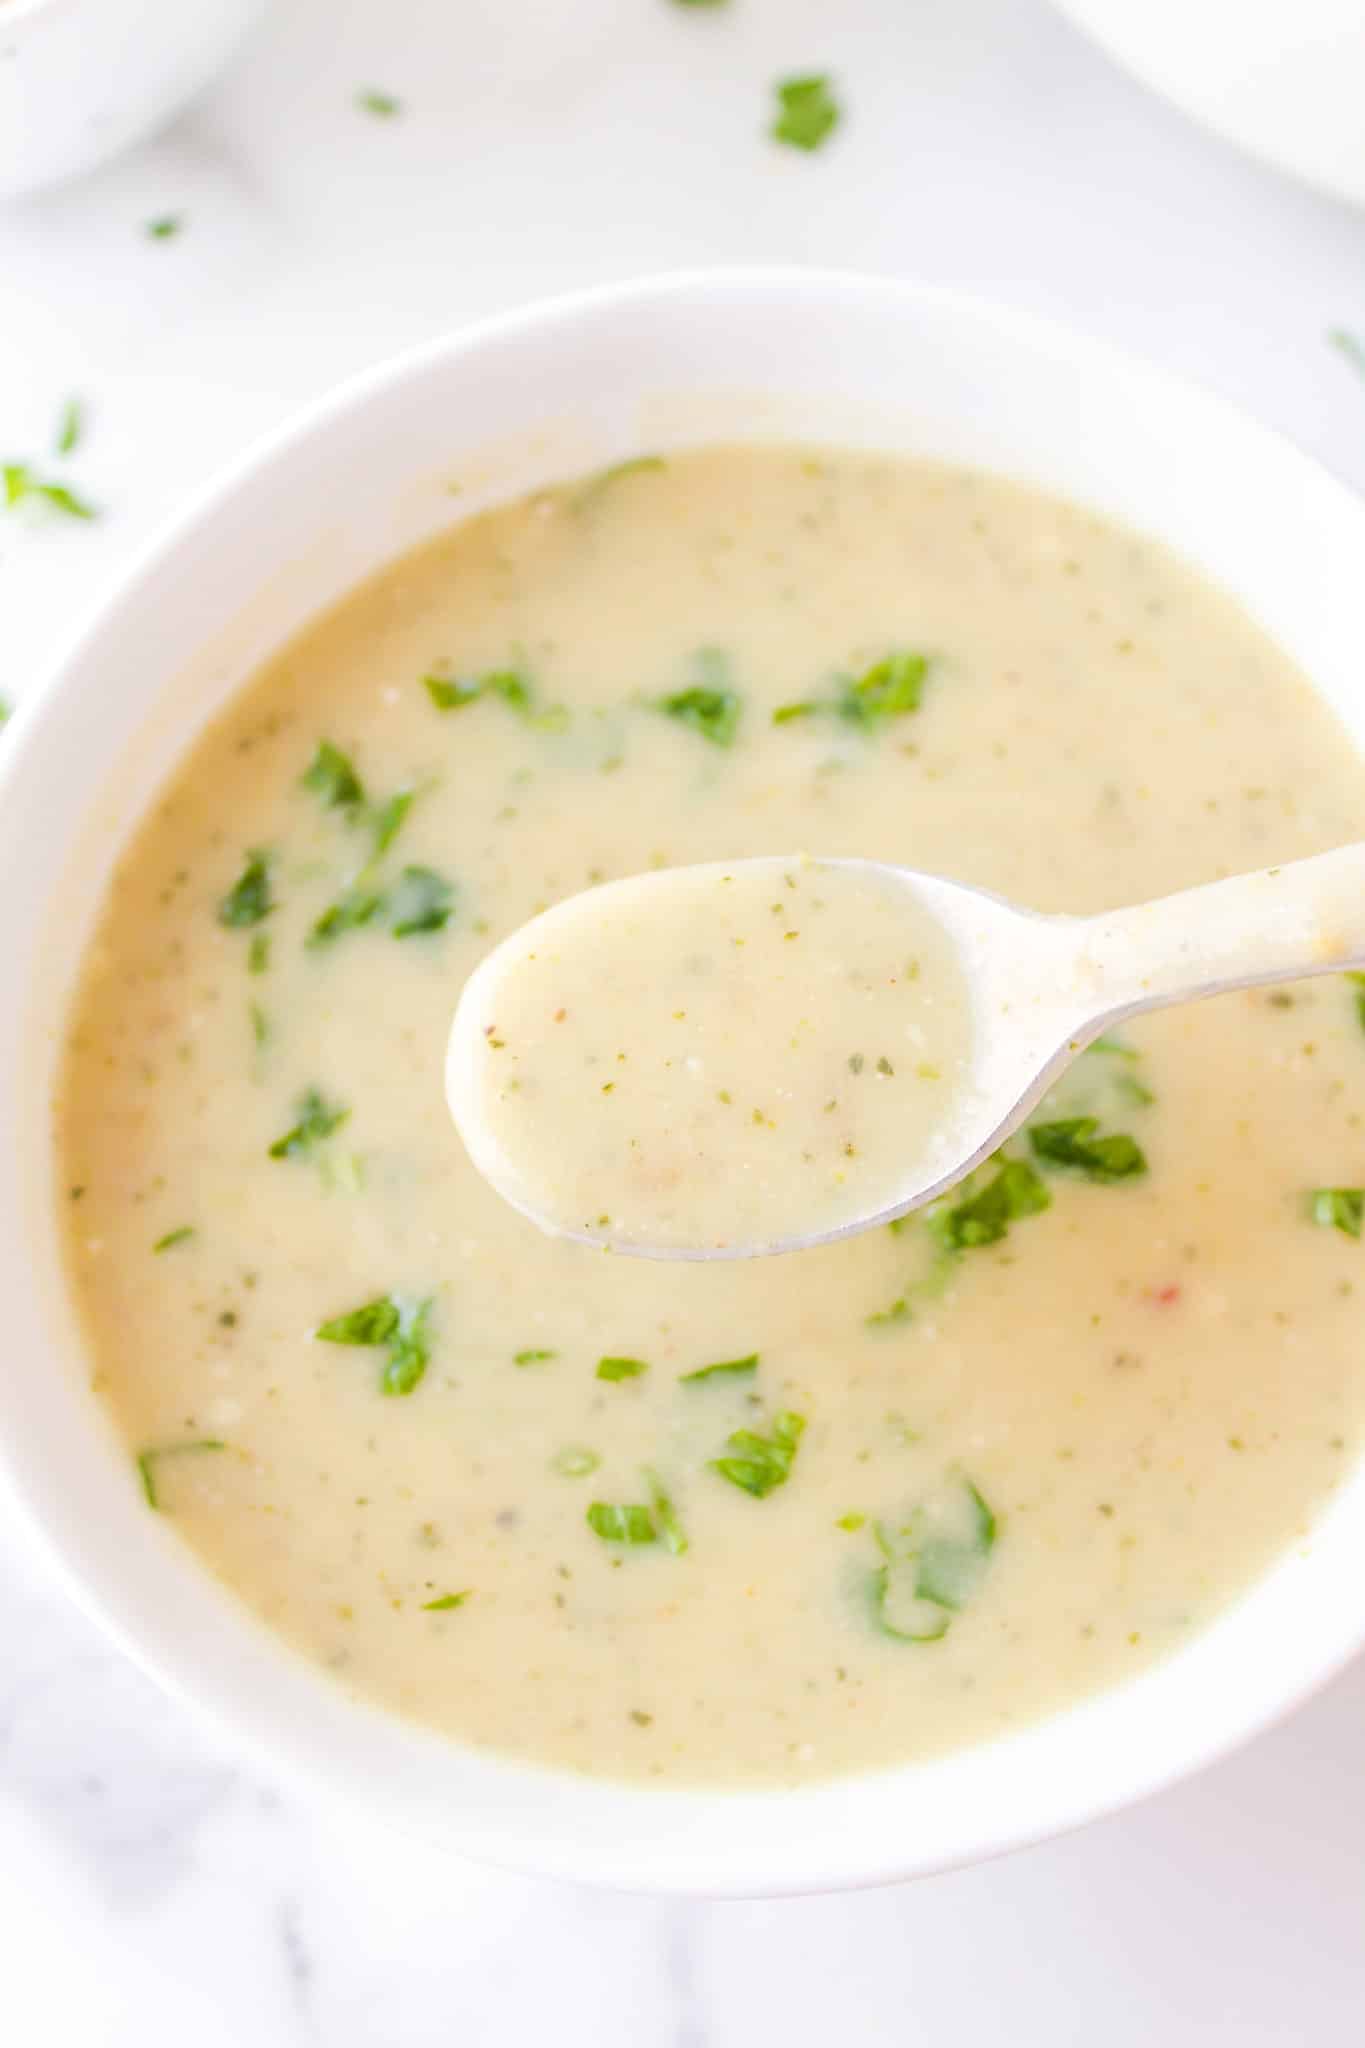 A silver spoon lifting a bite of potato soup from a white bowl.